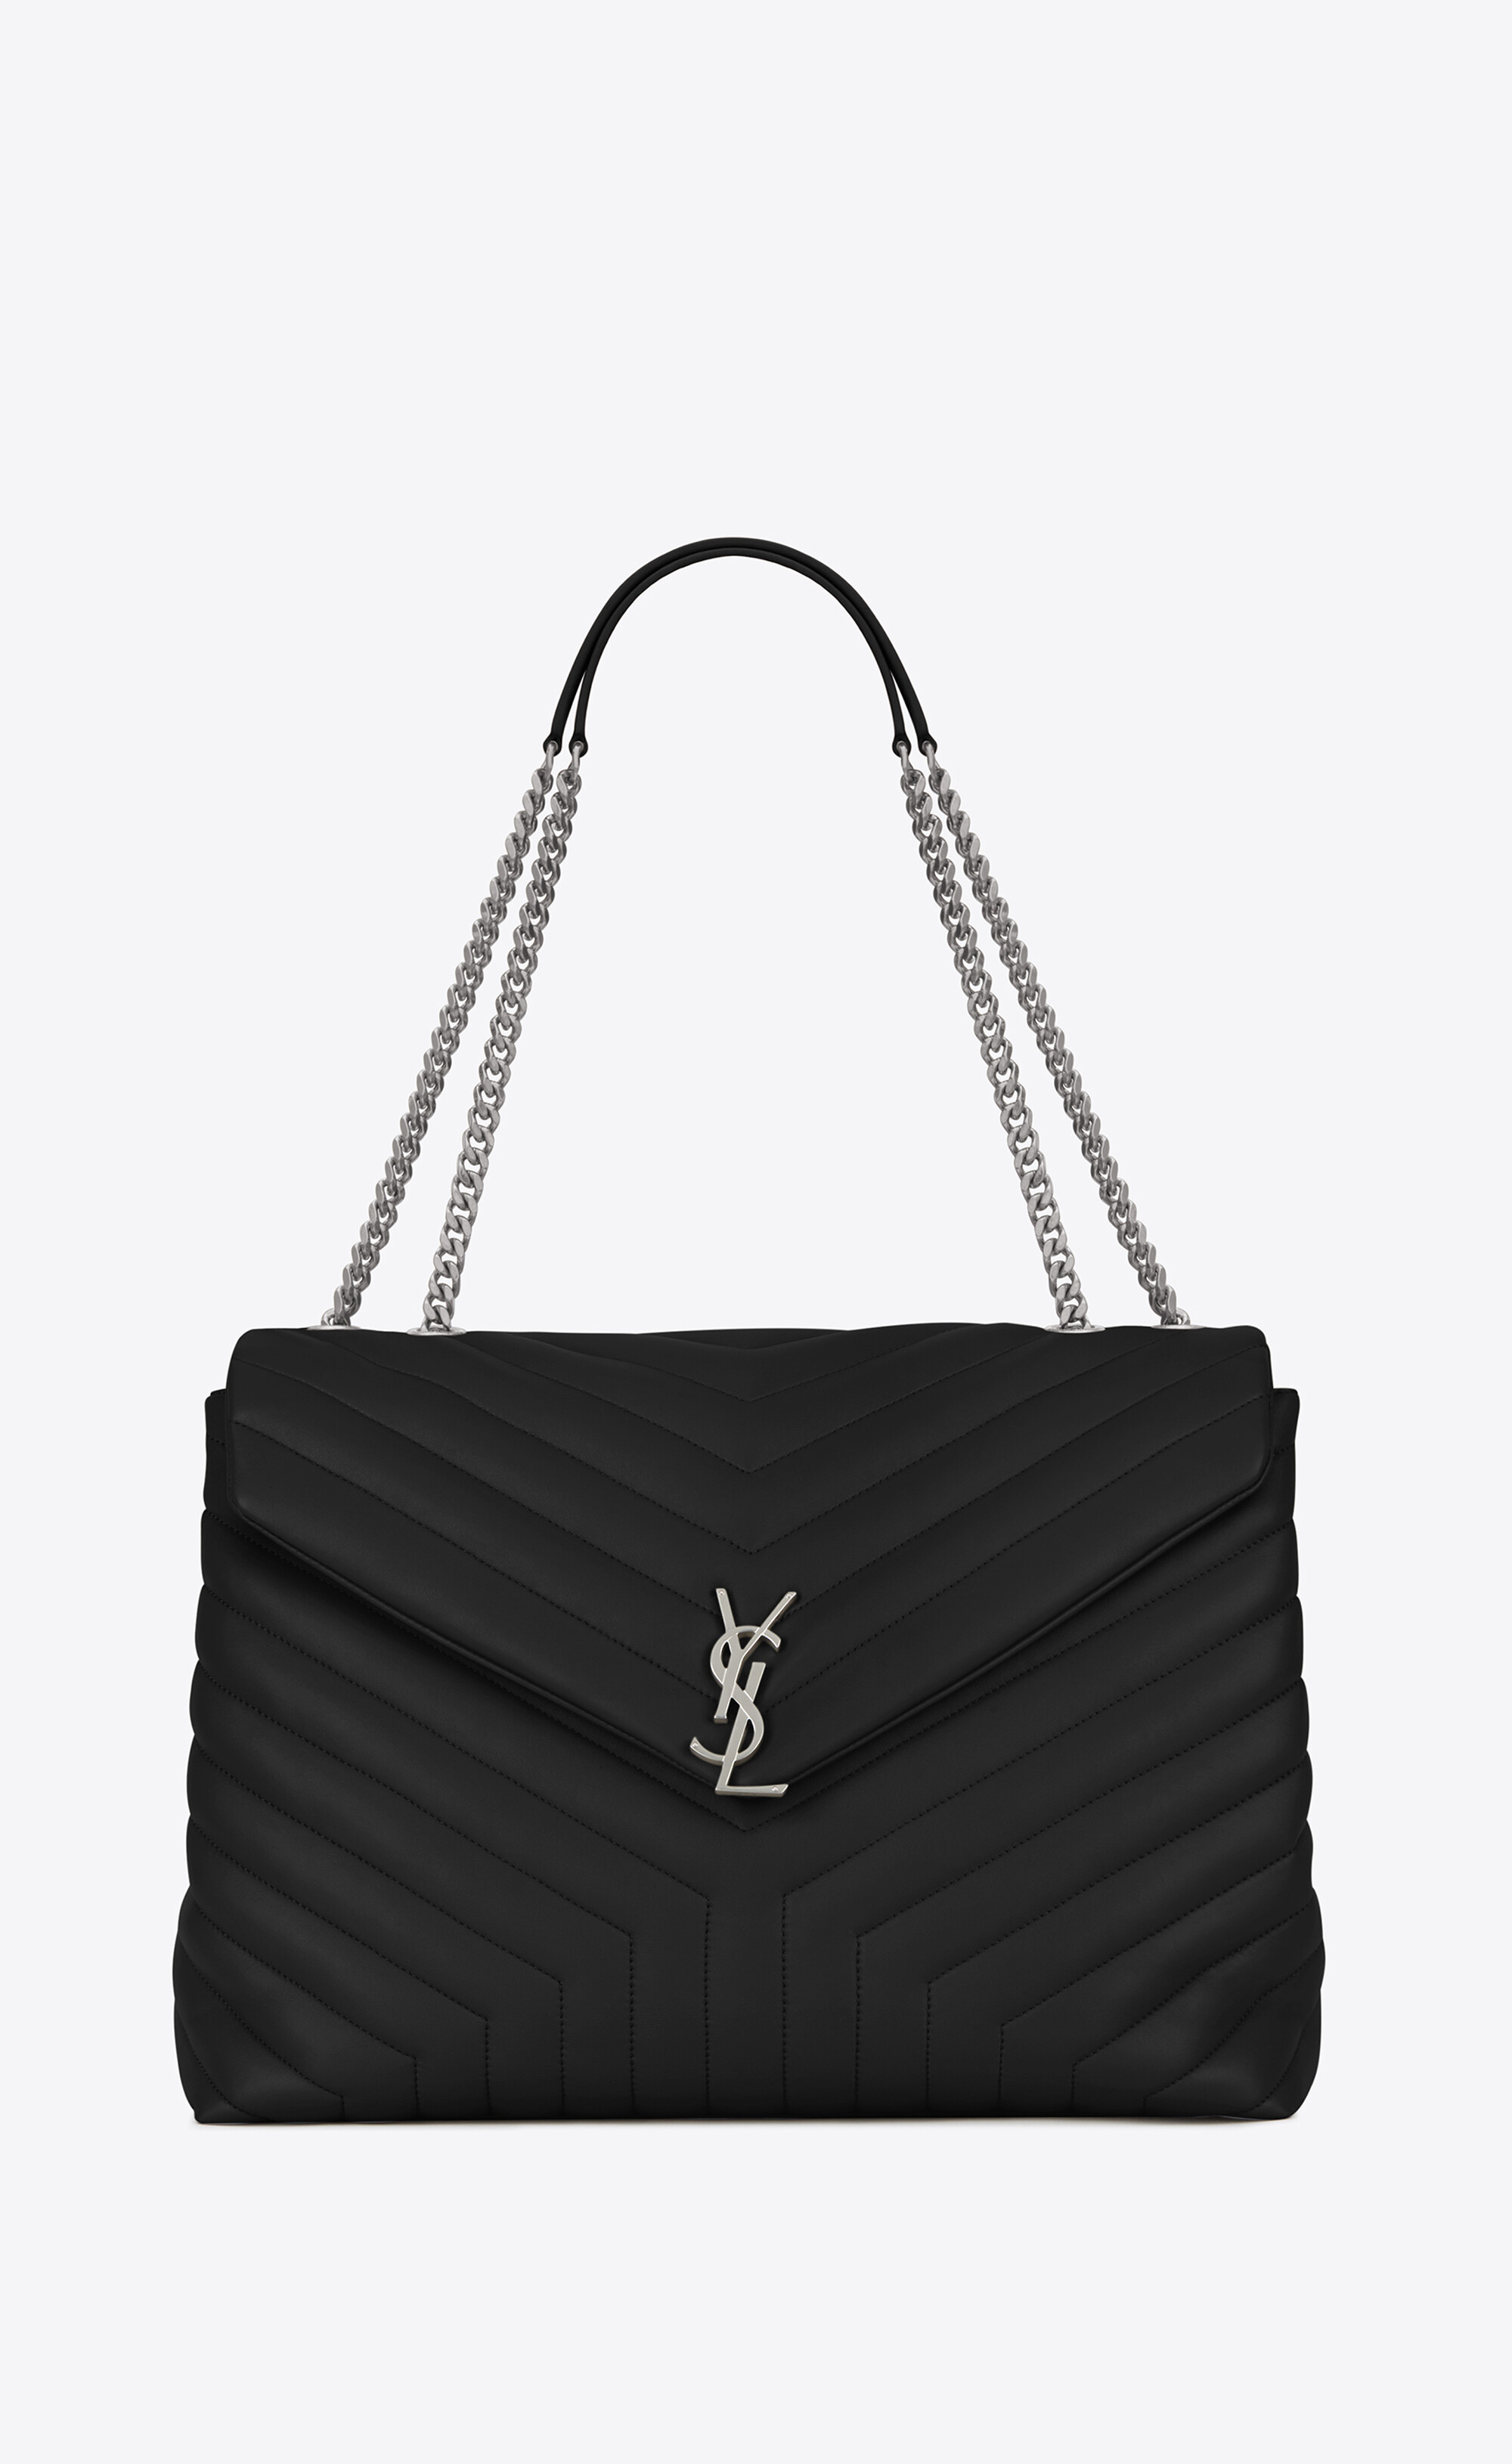 Handbags for Women  New Arrivals  Saint Laurent  YSLcom